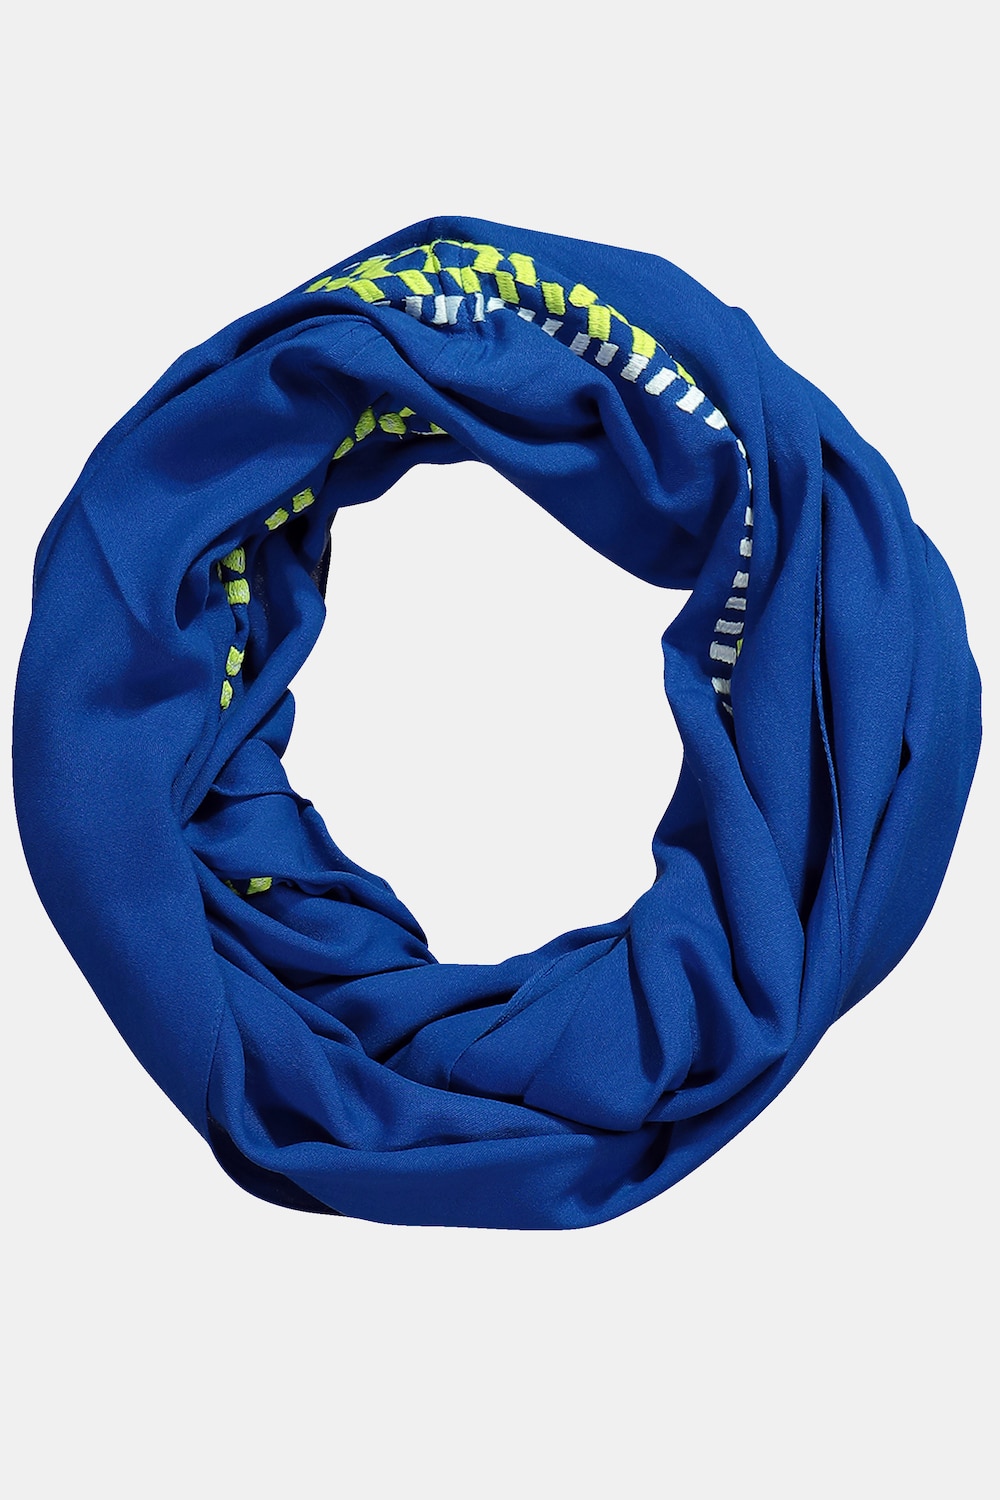 grandes tailles snood / foulard tubulaire avec broderies, femmes, bleu, taille: one size, viscose, ulla popken